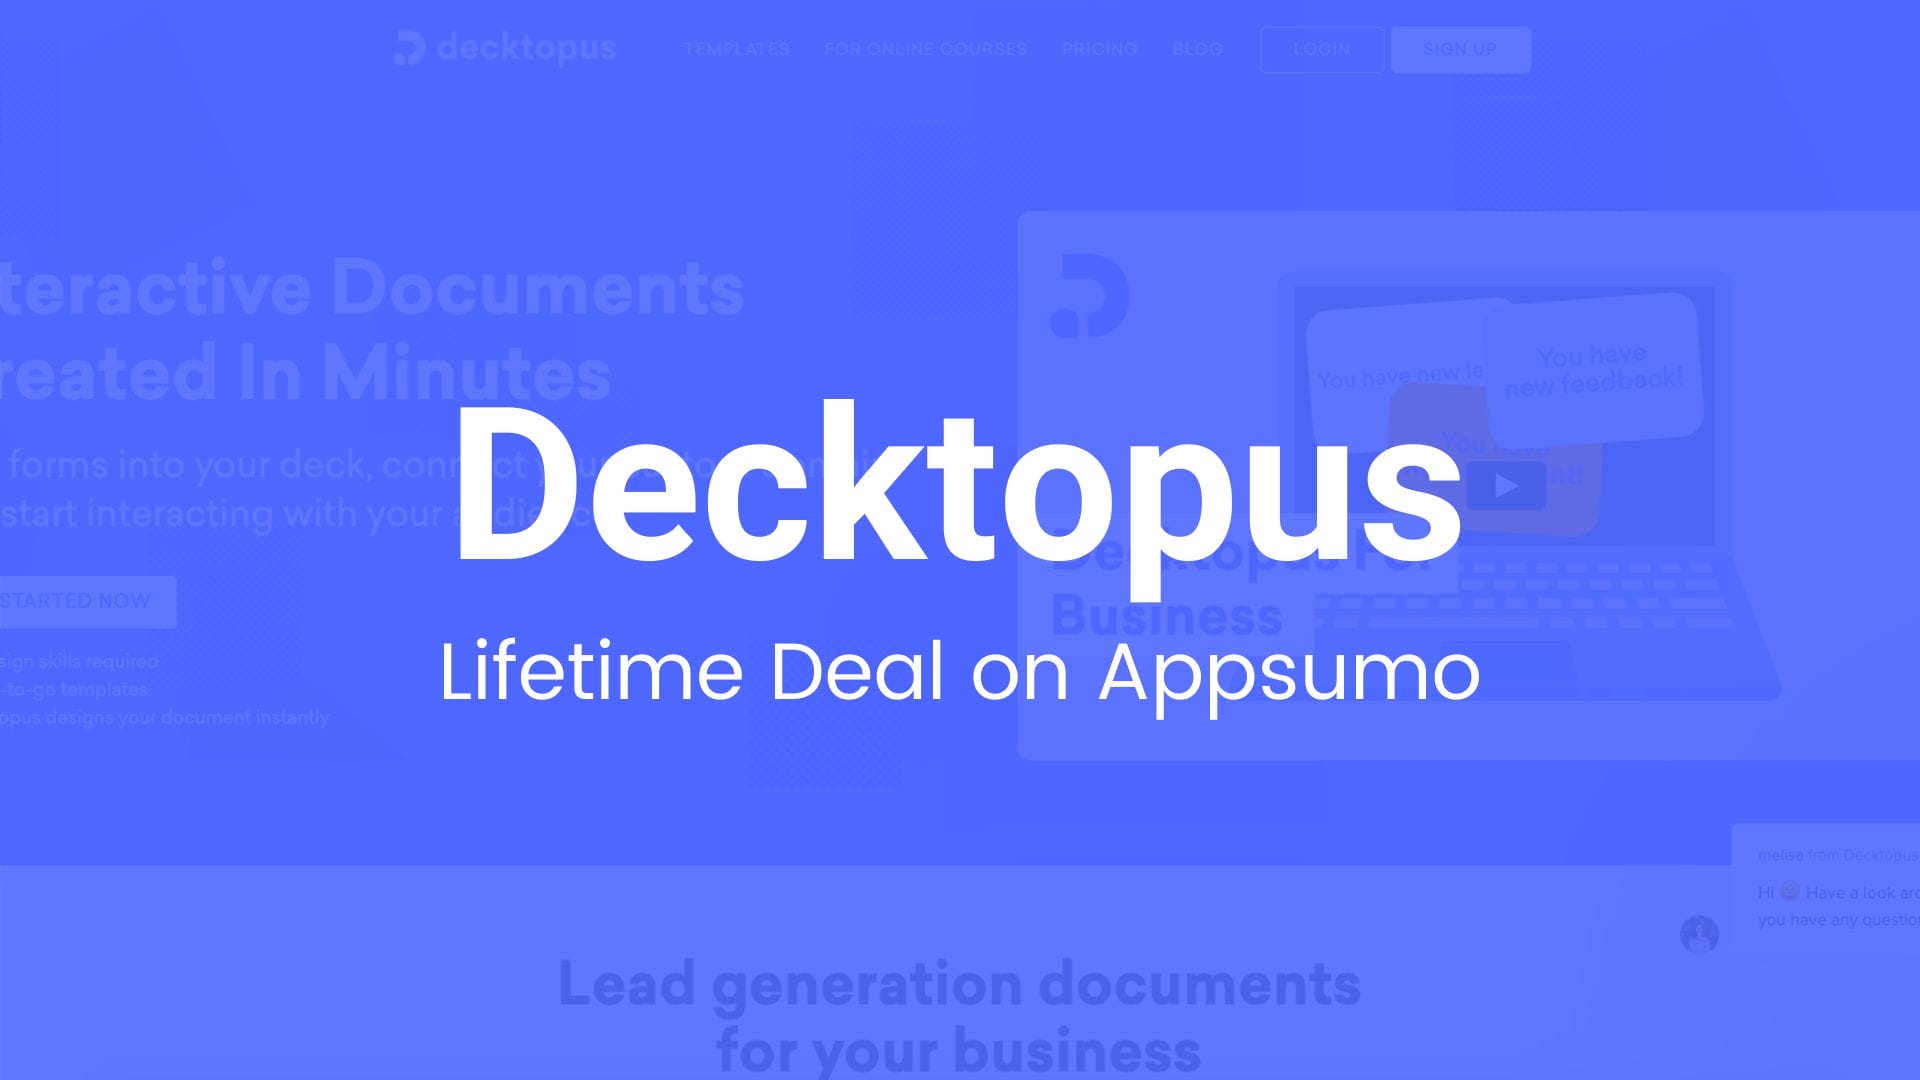 Decktopus: Creating Beautiful Document Decks